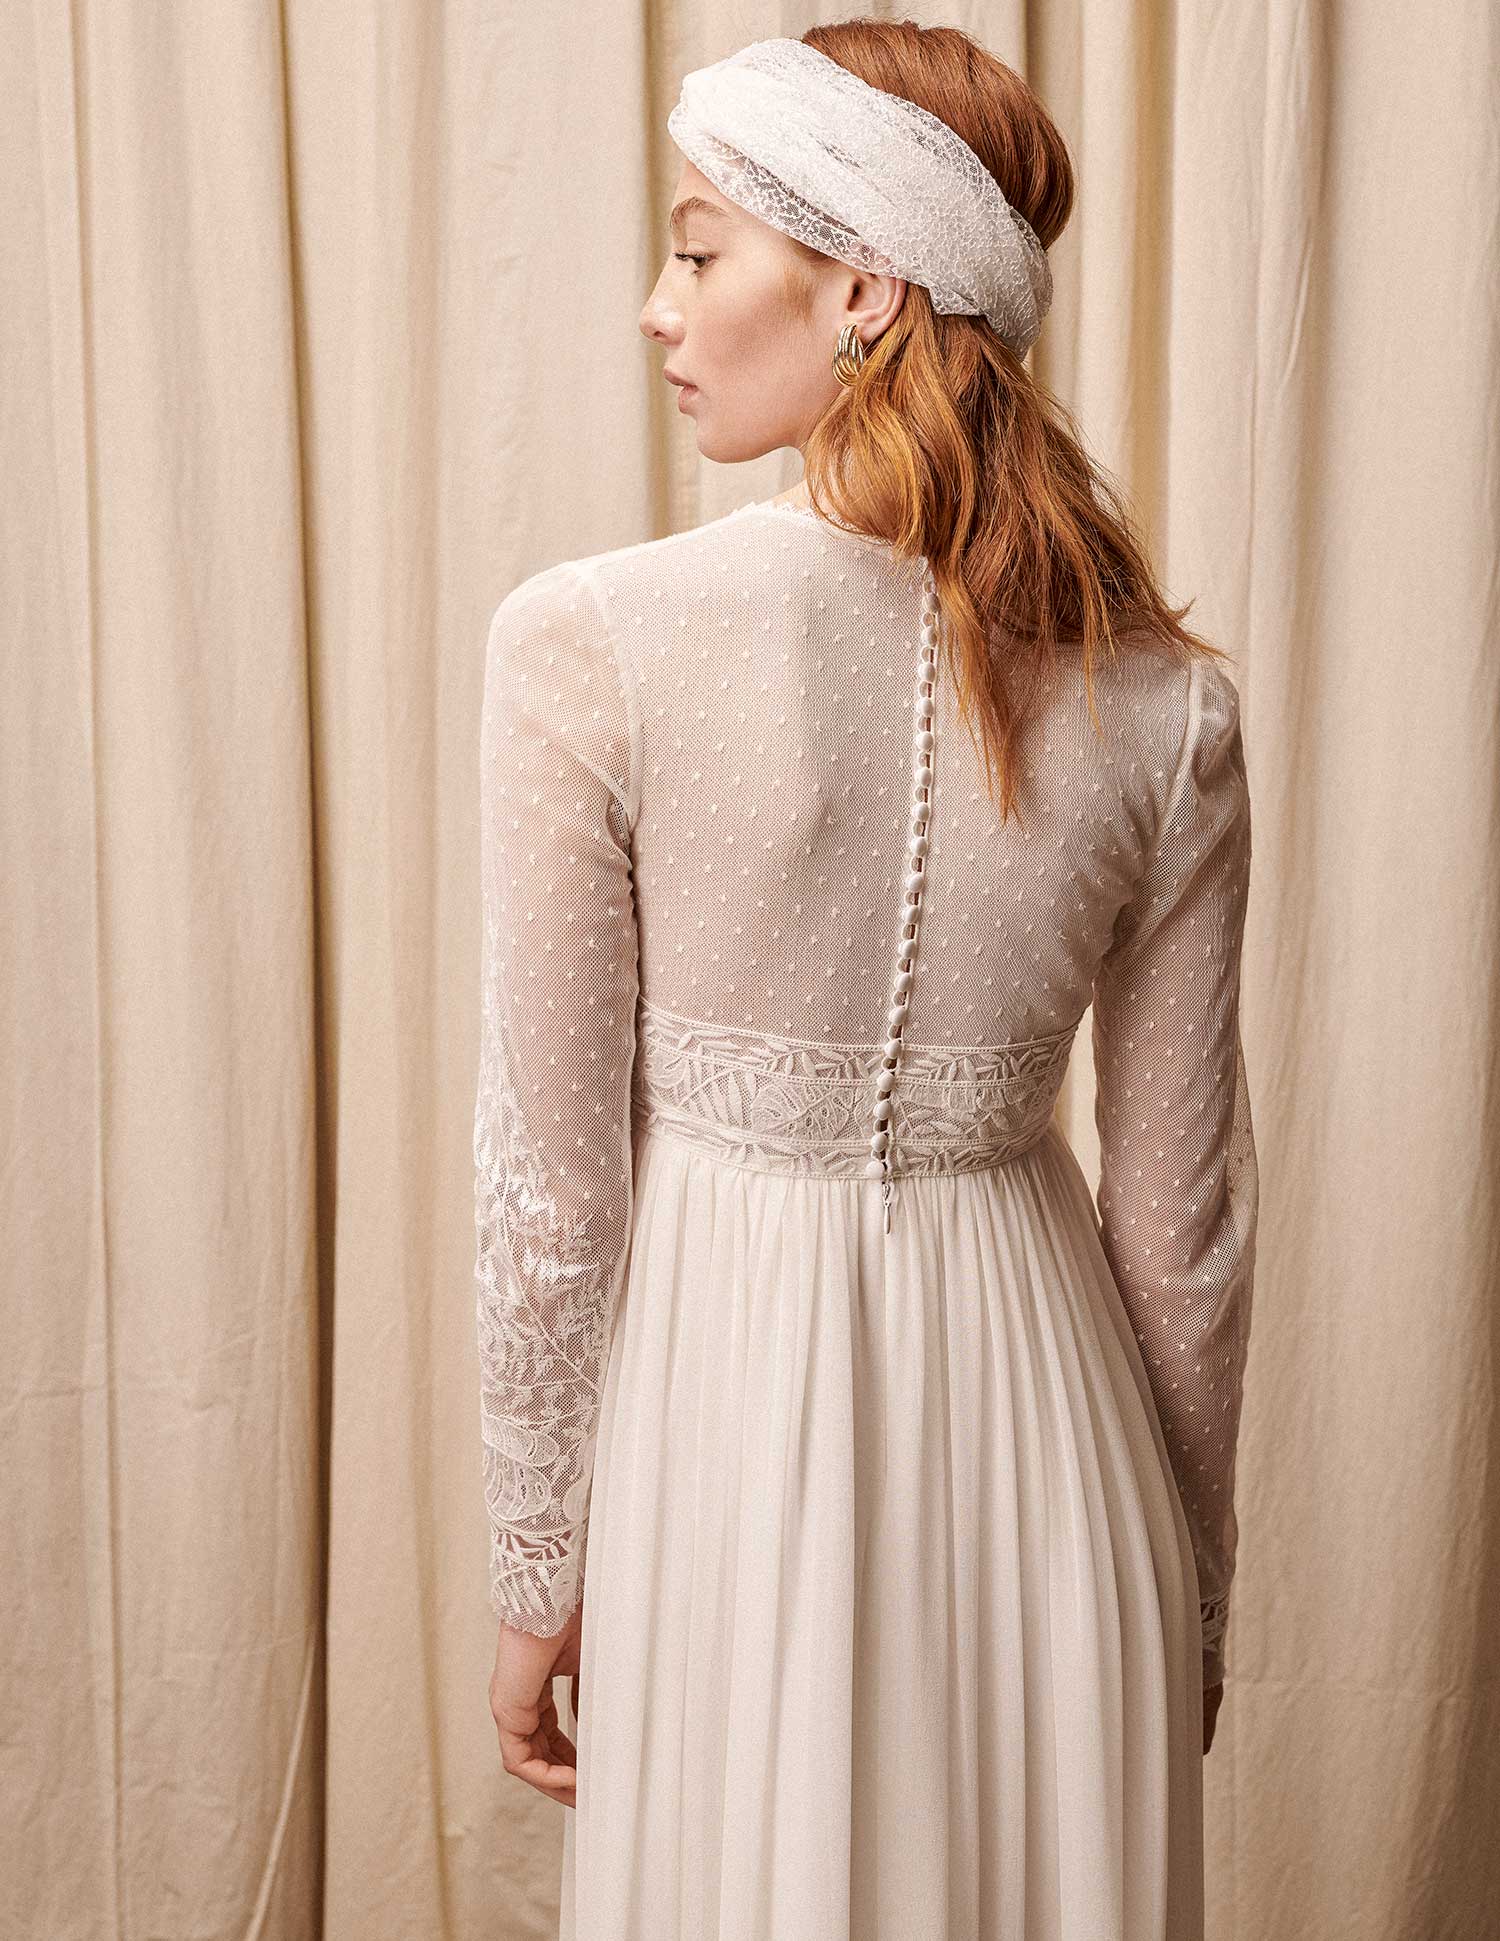 Atelier Manon Pascual - Collection robe de mariée Prêt à Porter Marylise & Rembo Styling 2021 - Lady